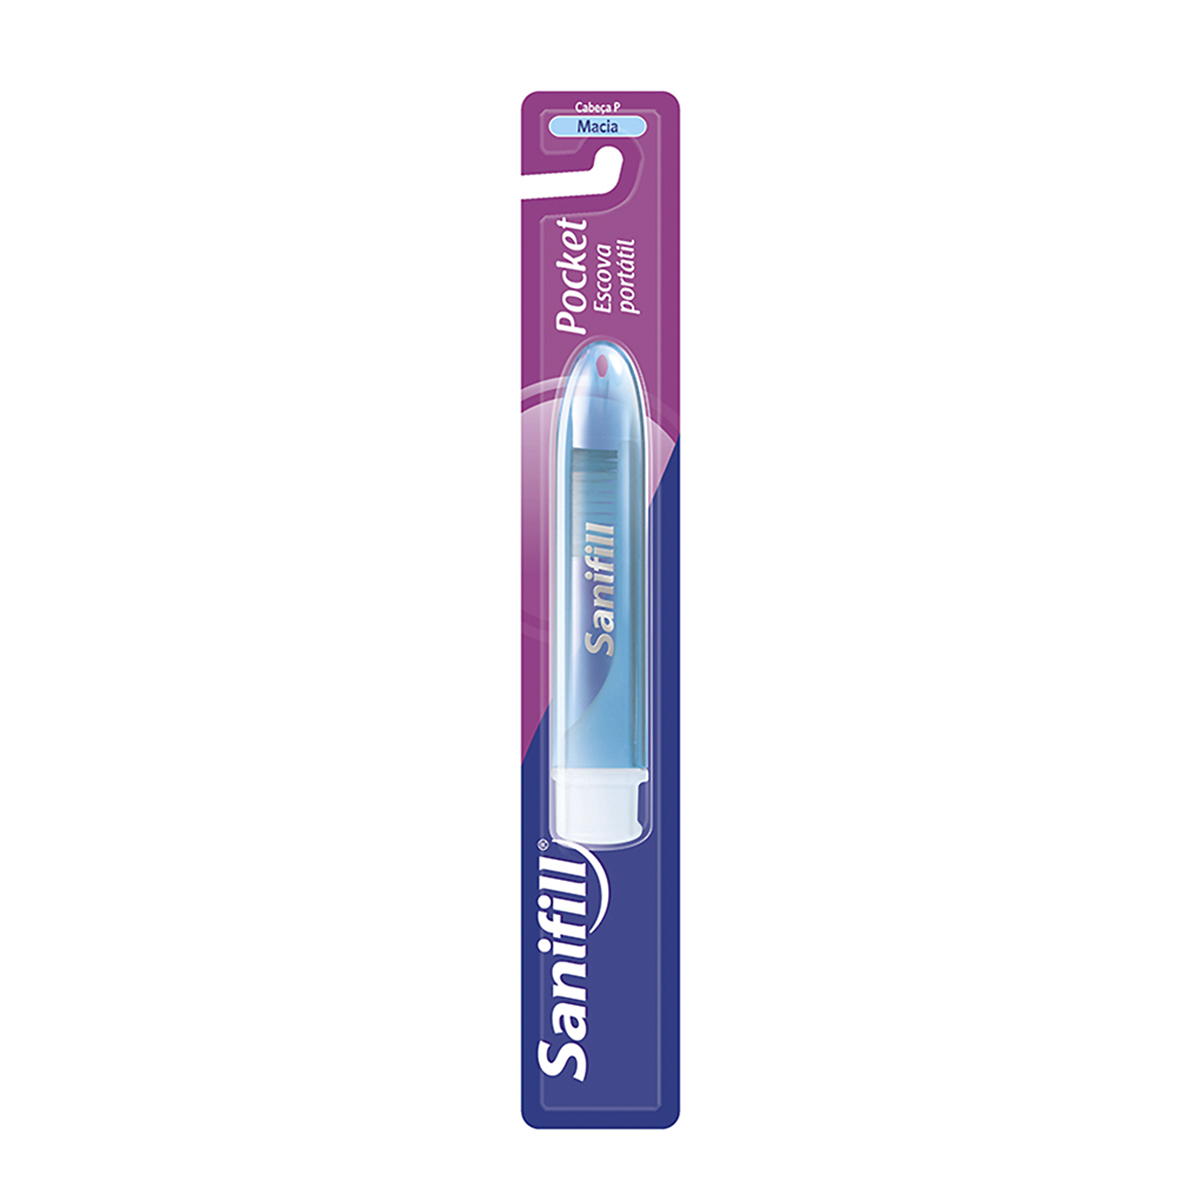 Escova Dental Portátil Sanifill Pocket 1 Unidade